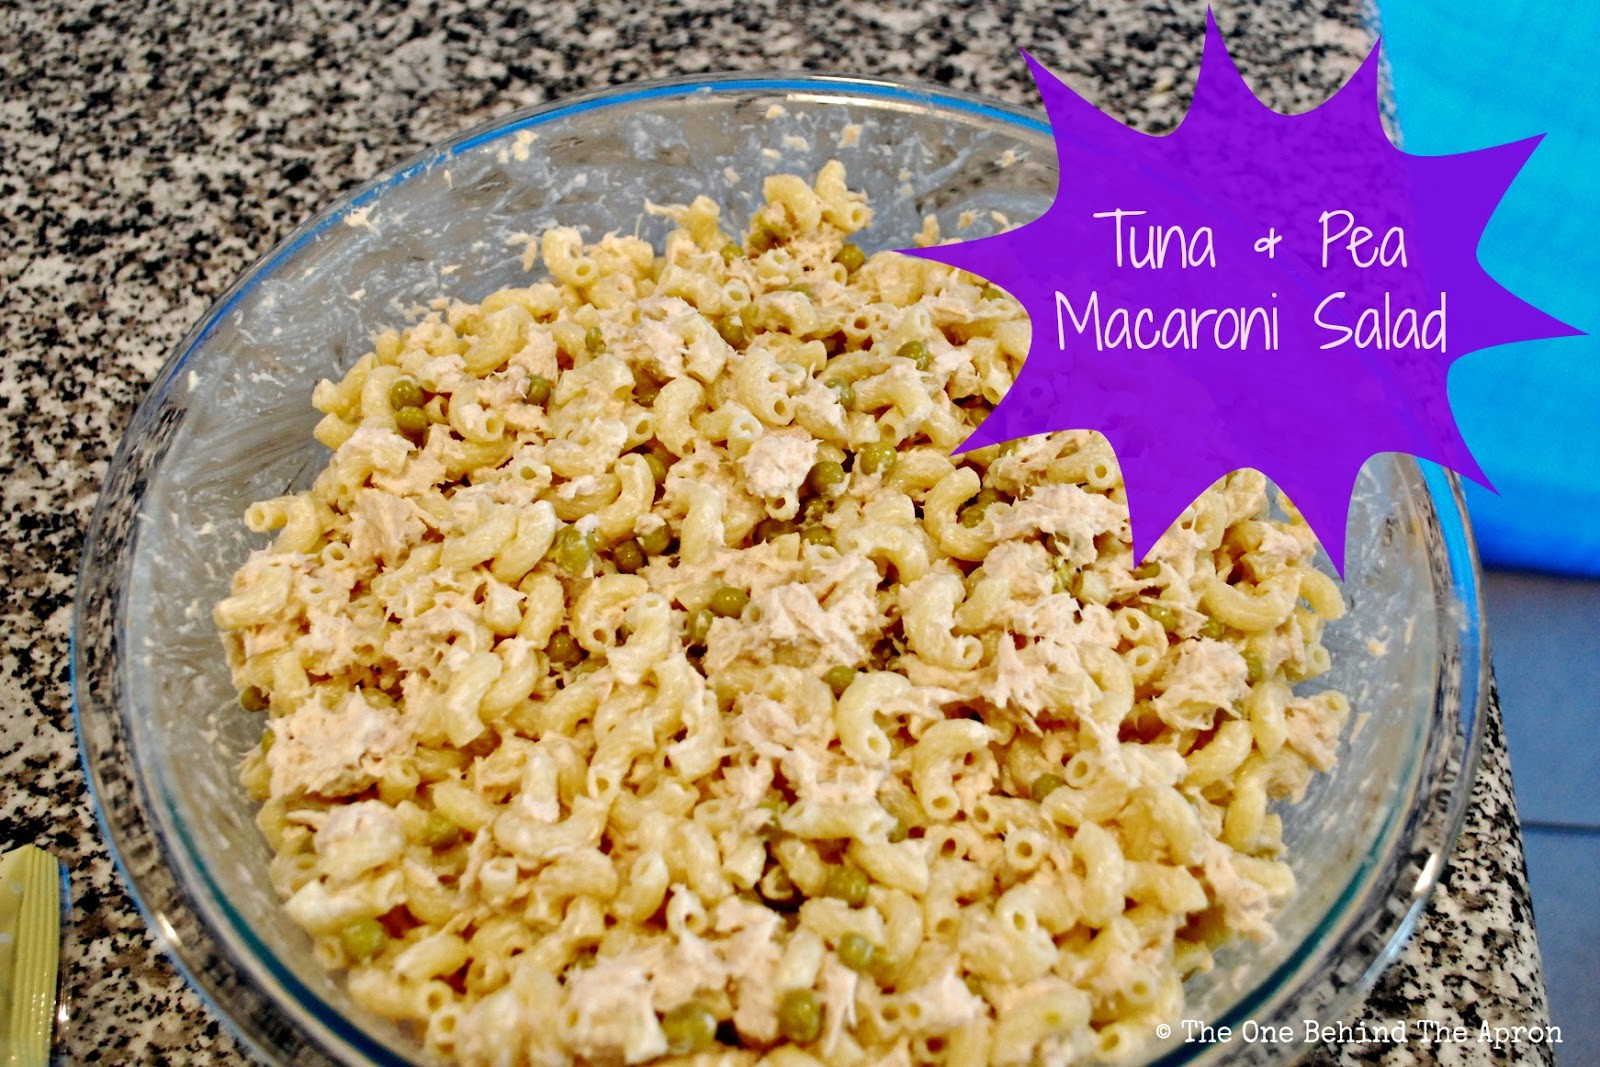 Tuna Macaroni Salad With Peas
 The e Behind The Apron Tuna & Pea Macaroni Salad